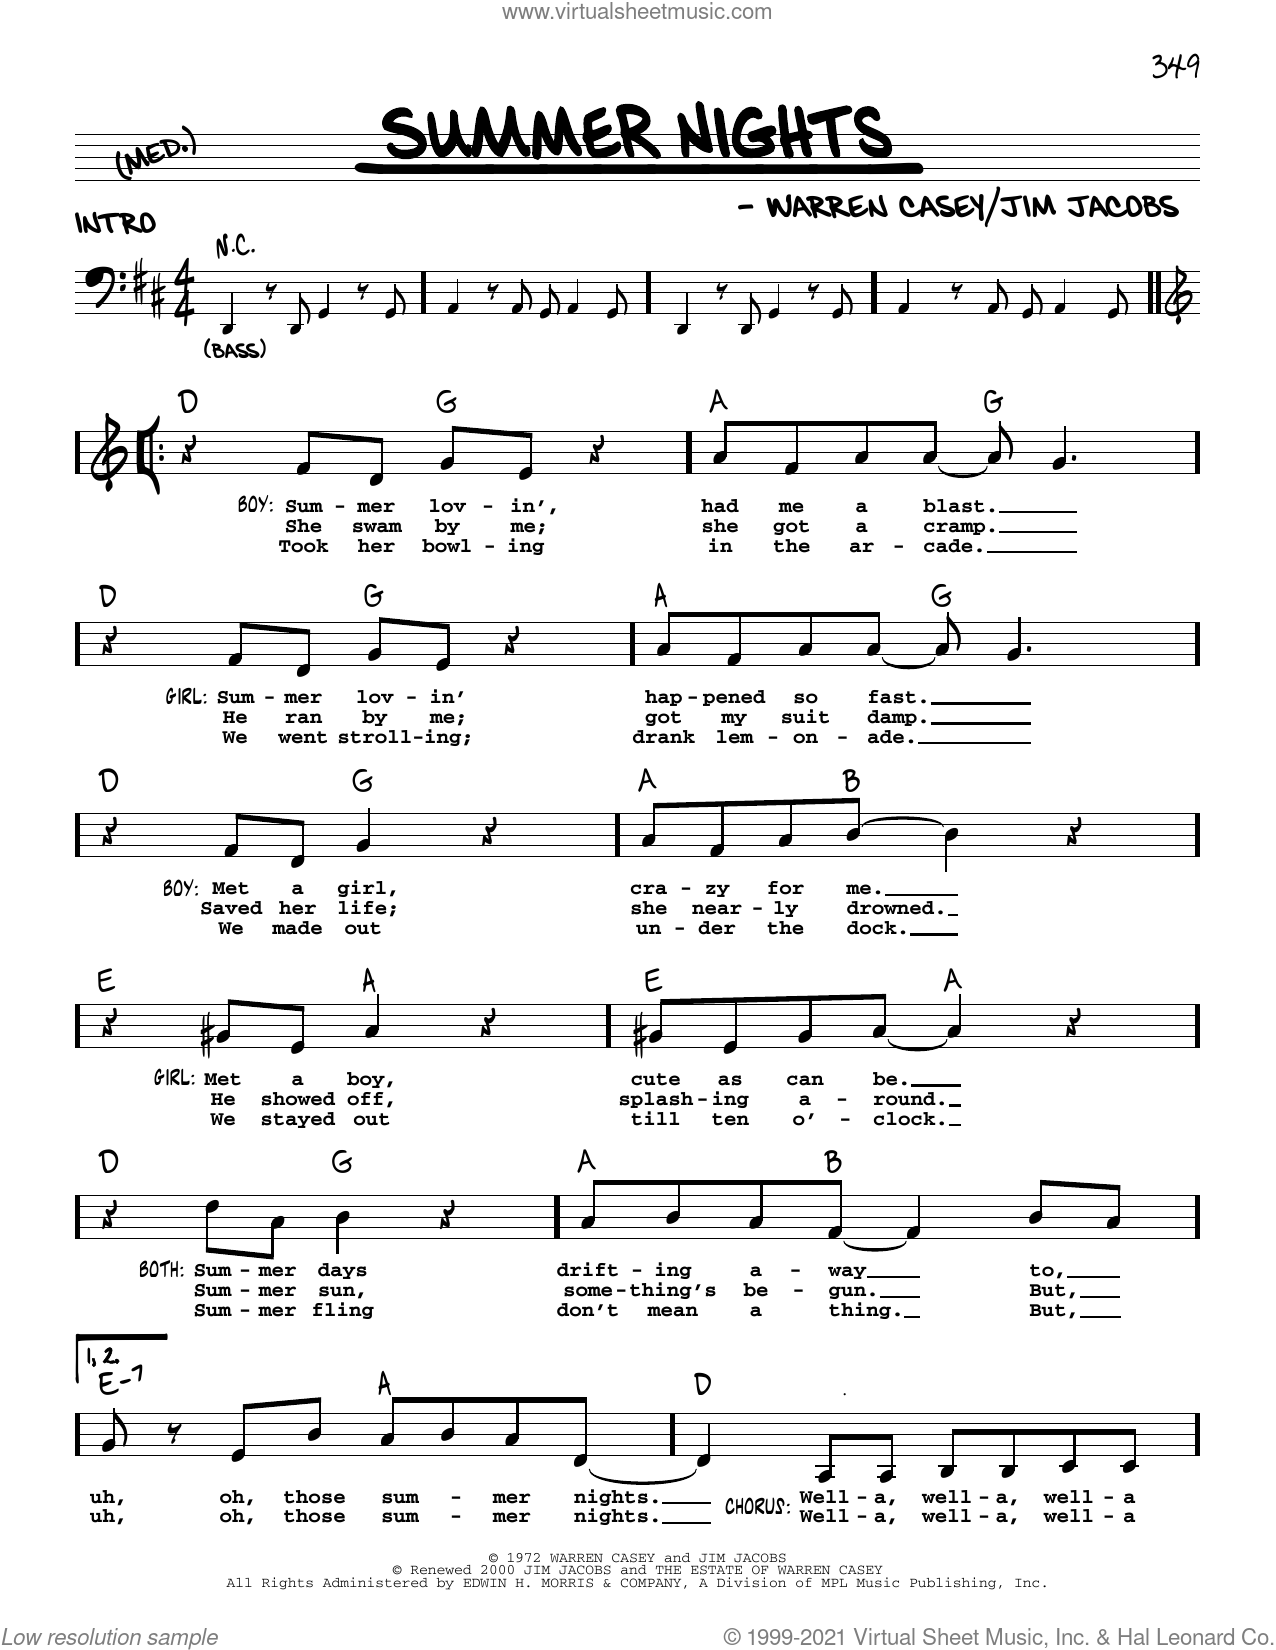 Summer Nights sheet music (real book with lyrics) (PDF)